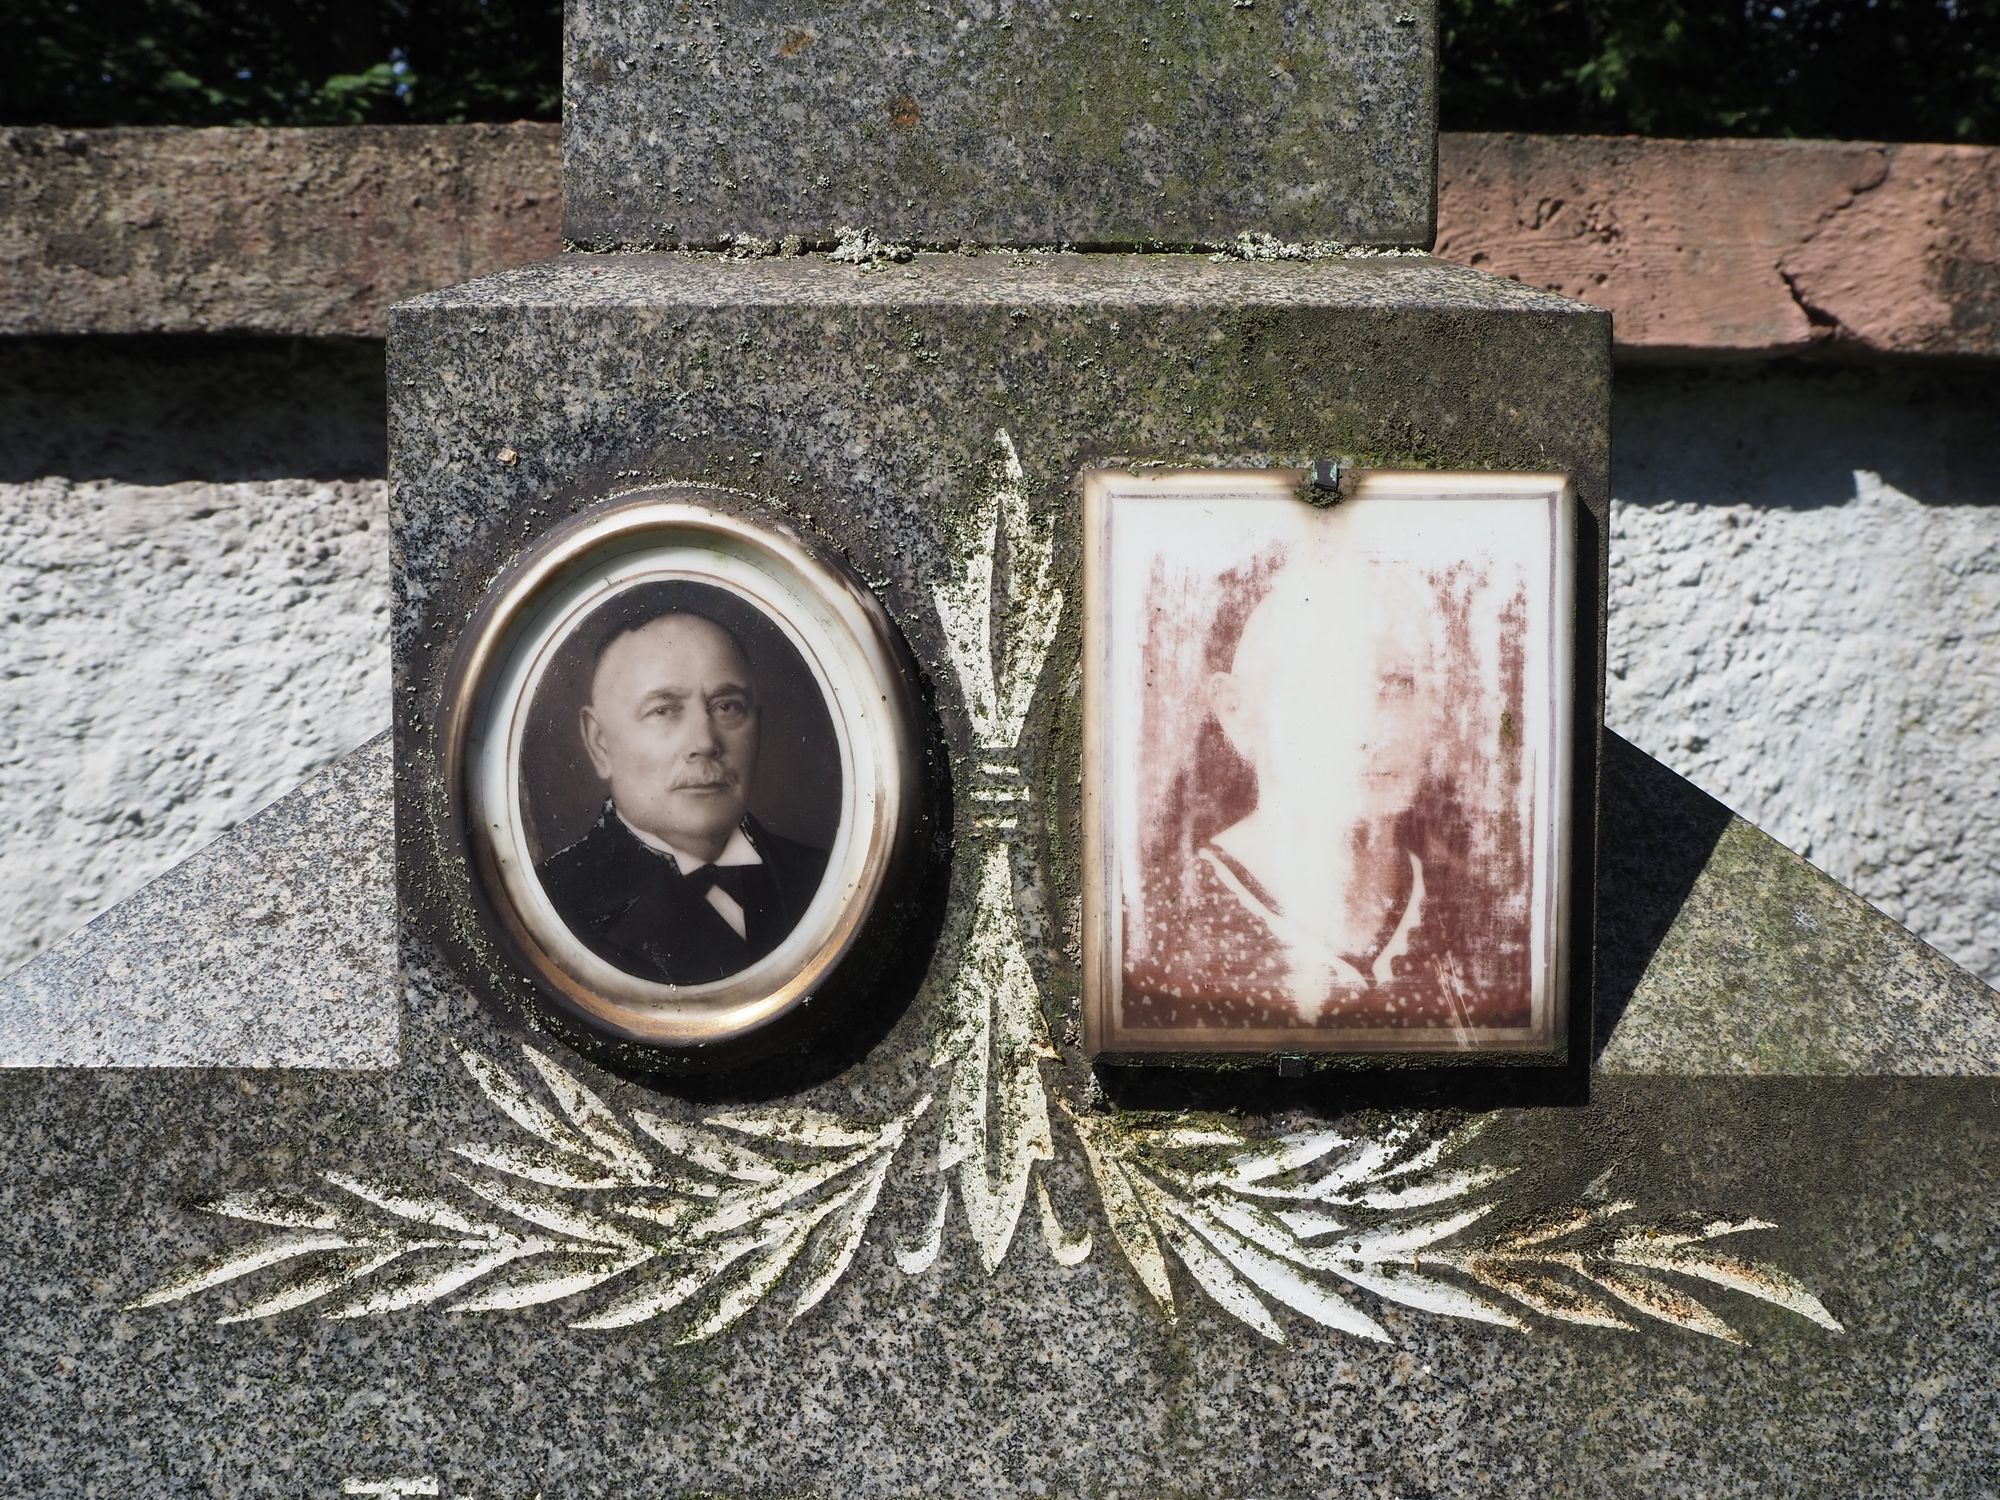 Photographs from the gravestone of Jan and Zuzanna Roik, cemetery in Český Těšín, as of 2022.